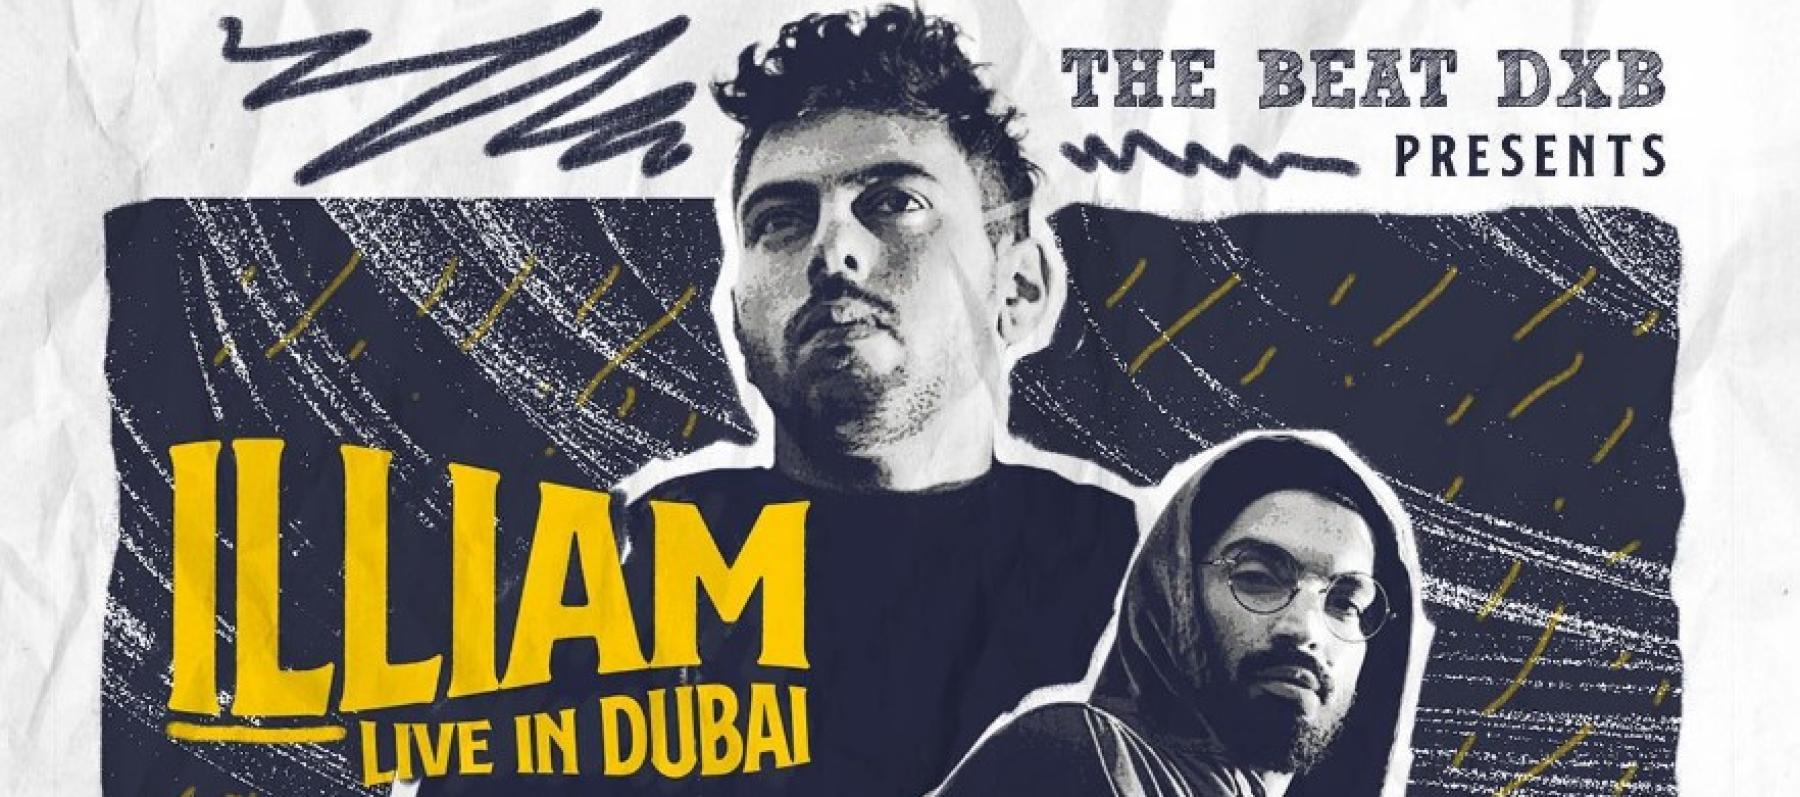 The beat يجمع الـ rappers في دبي